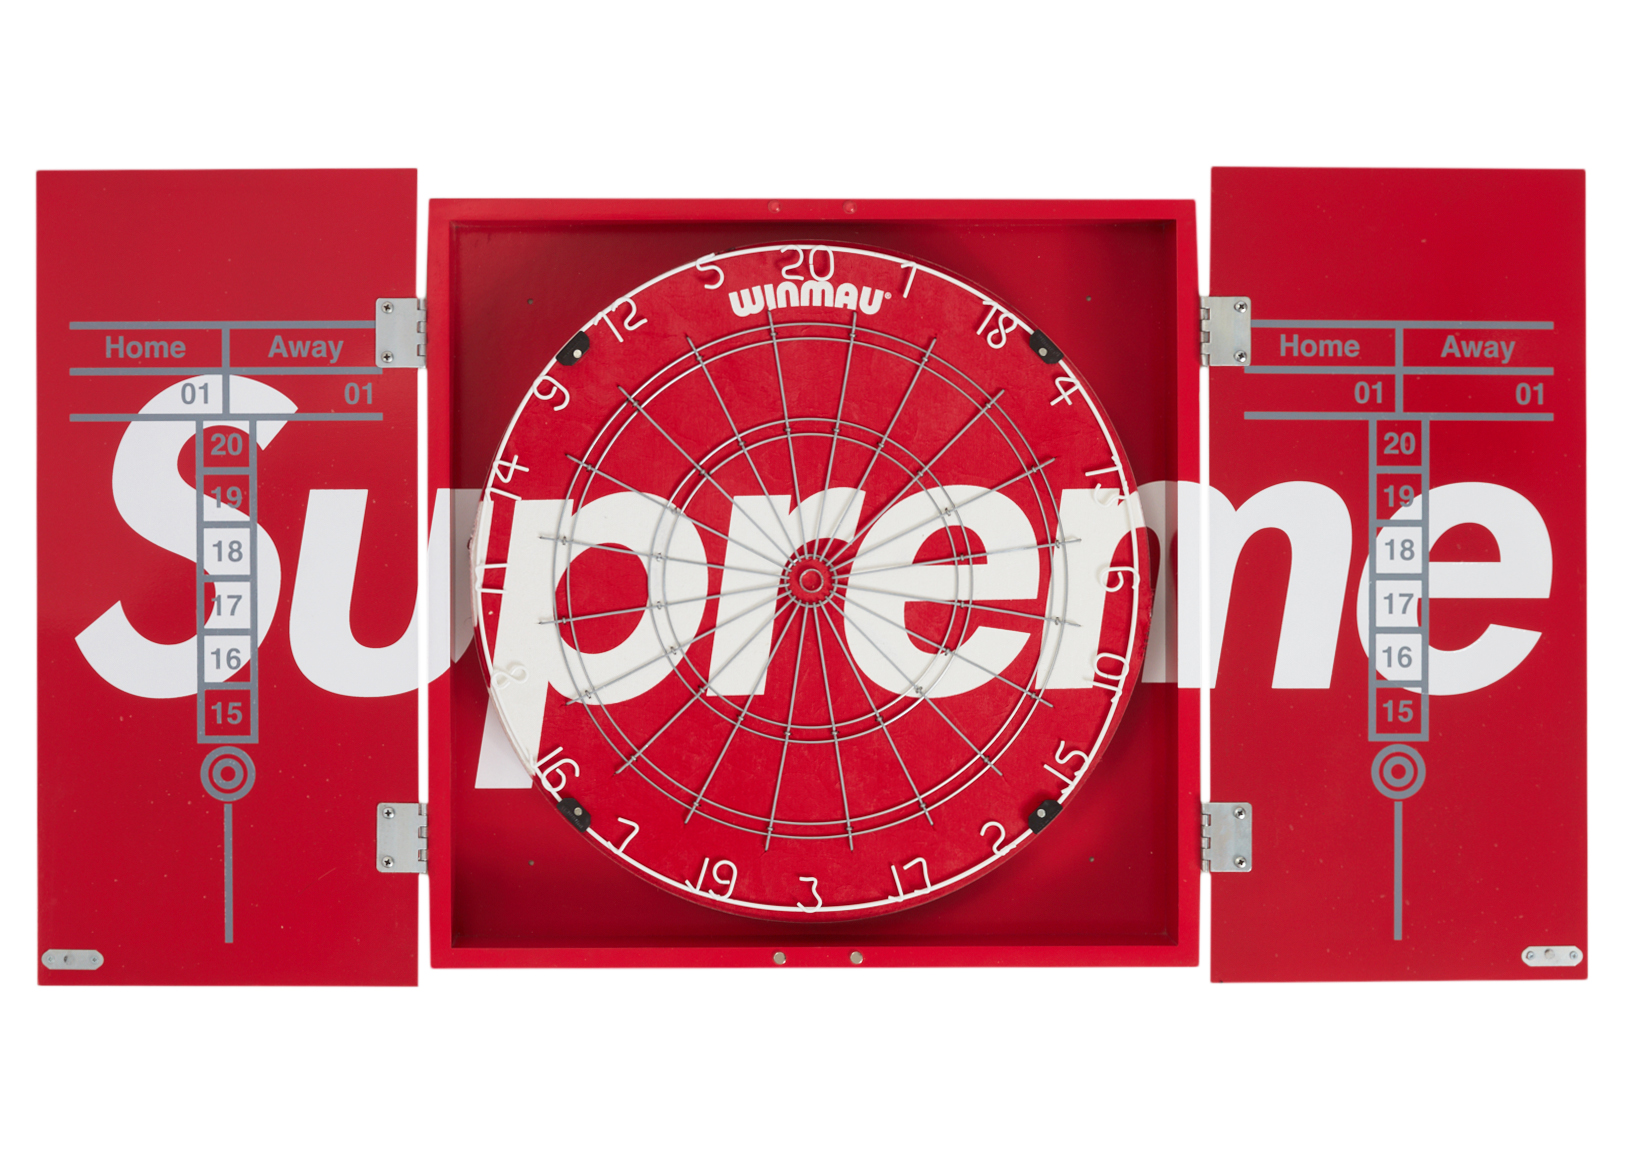 Supreme /Winmau Dartboard Set